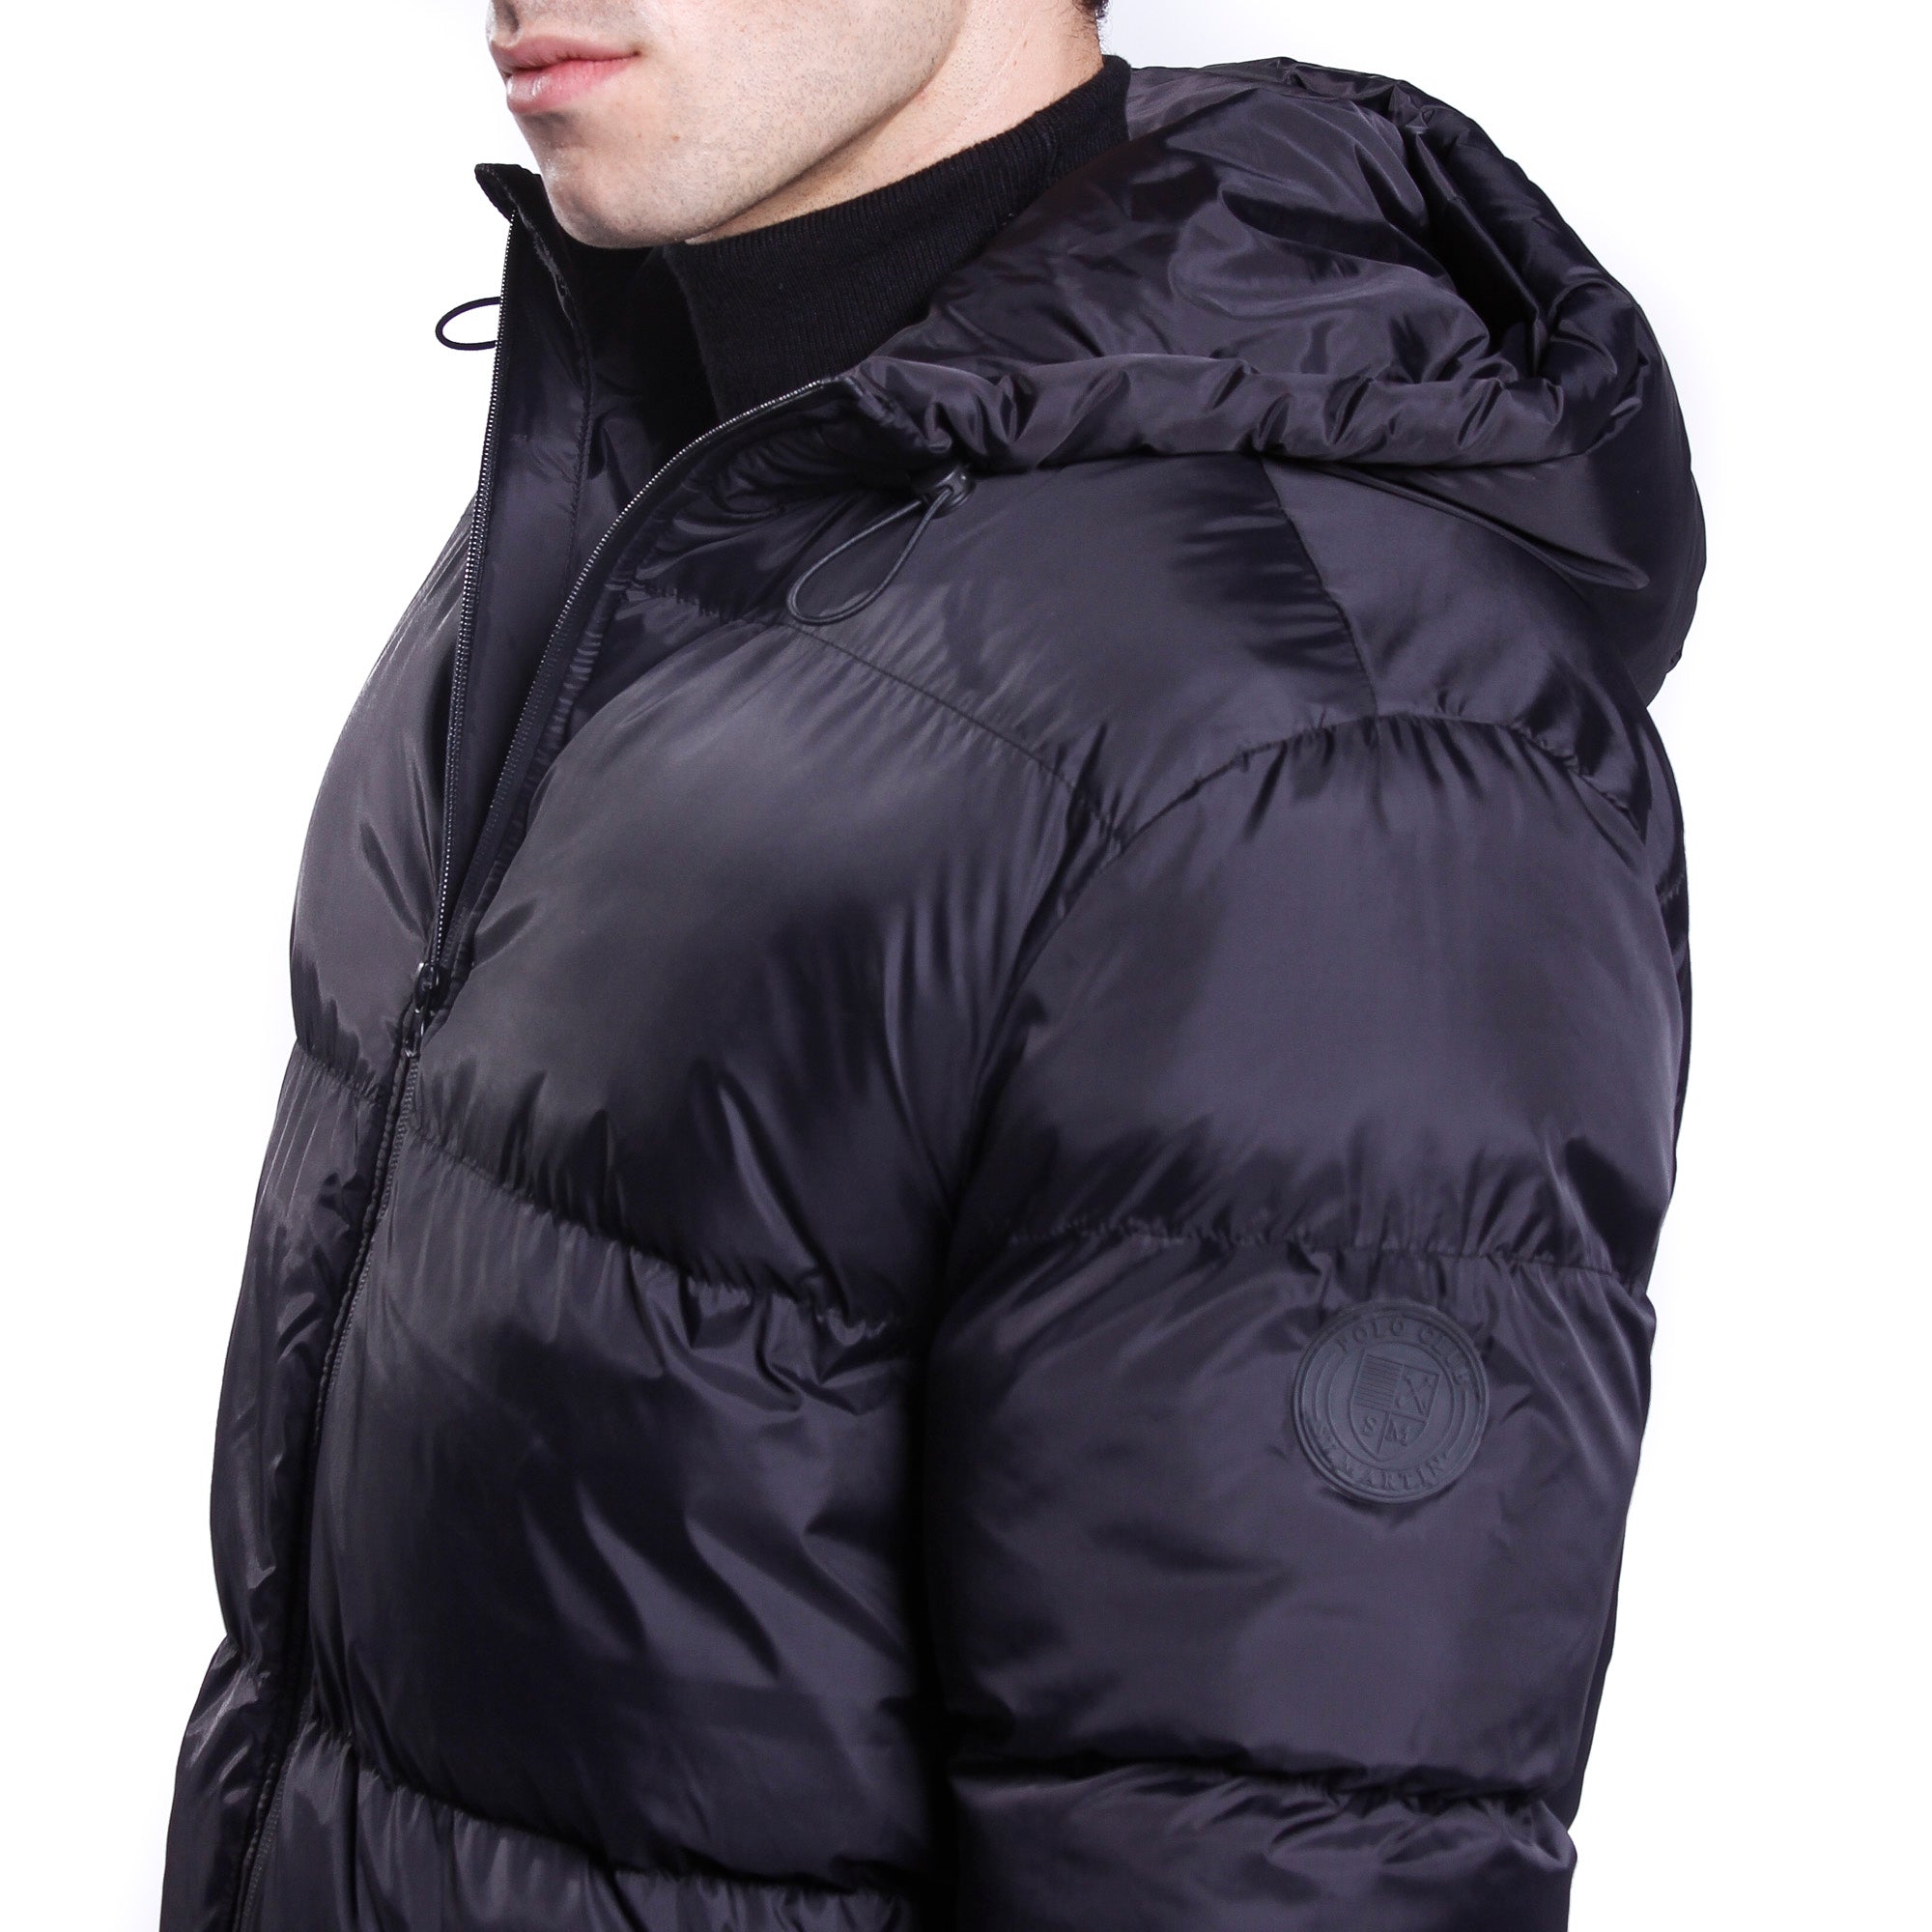 Nylon jacket with hood and logo on the sleeve